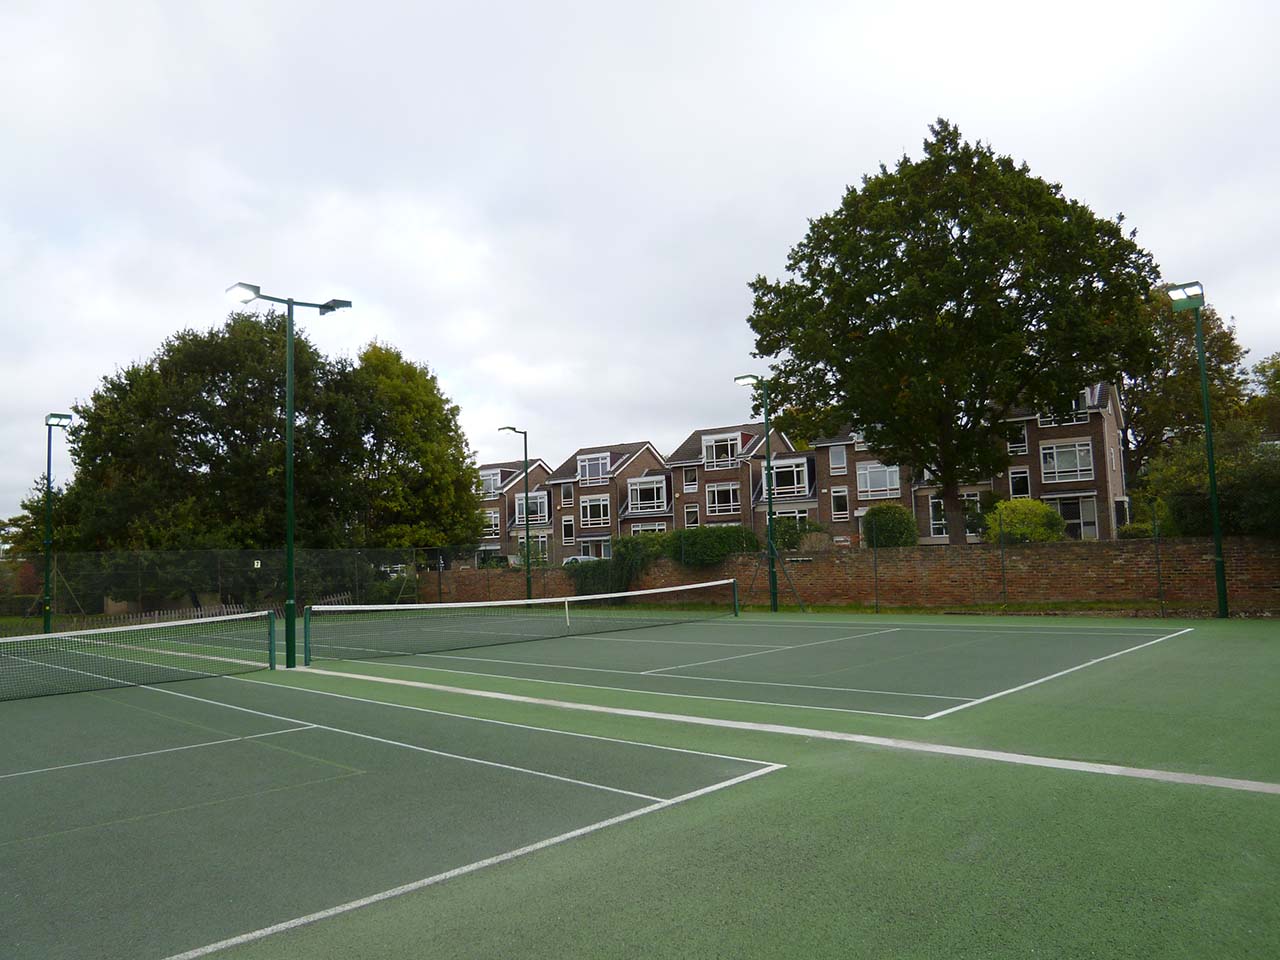 Old College Lawn Tennis & Croquet Club